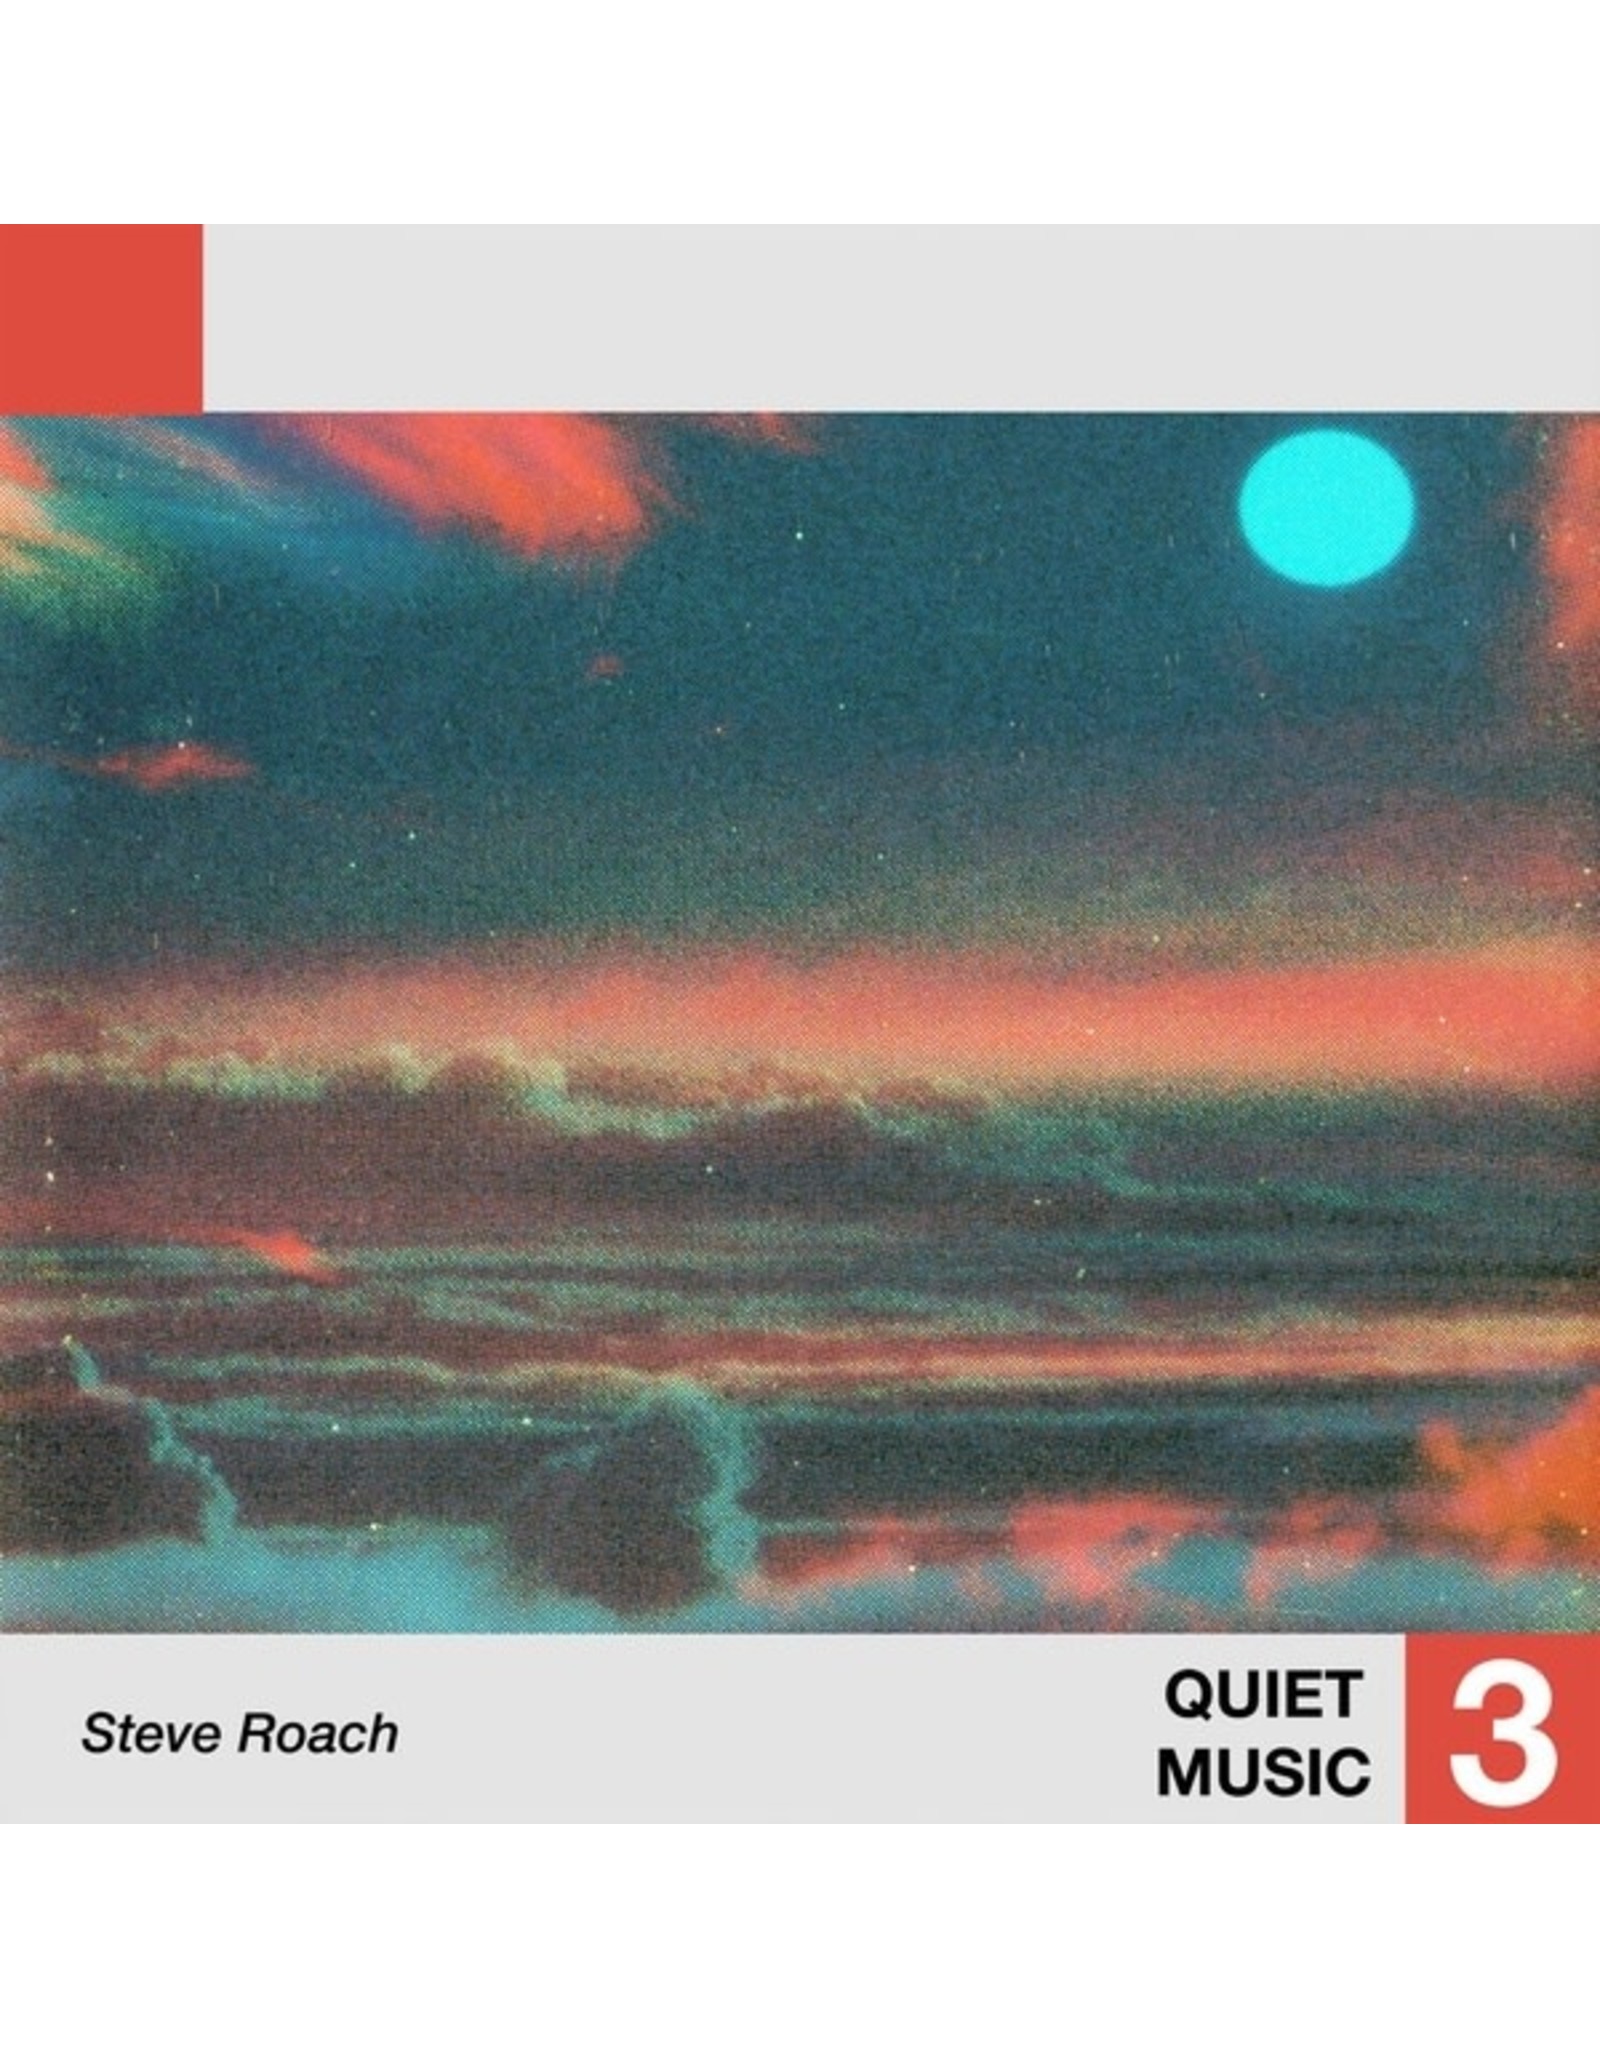 Telephone Explosion Roach, Steve: Quiet Music 3 LP